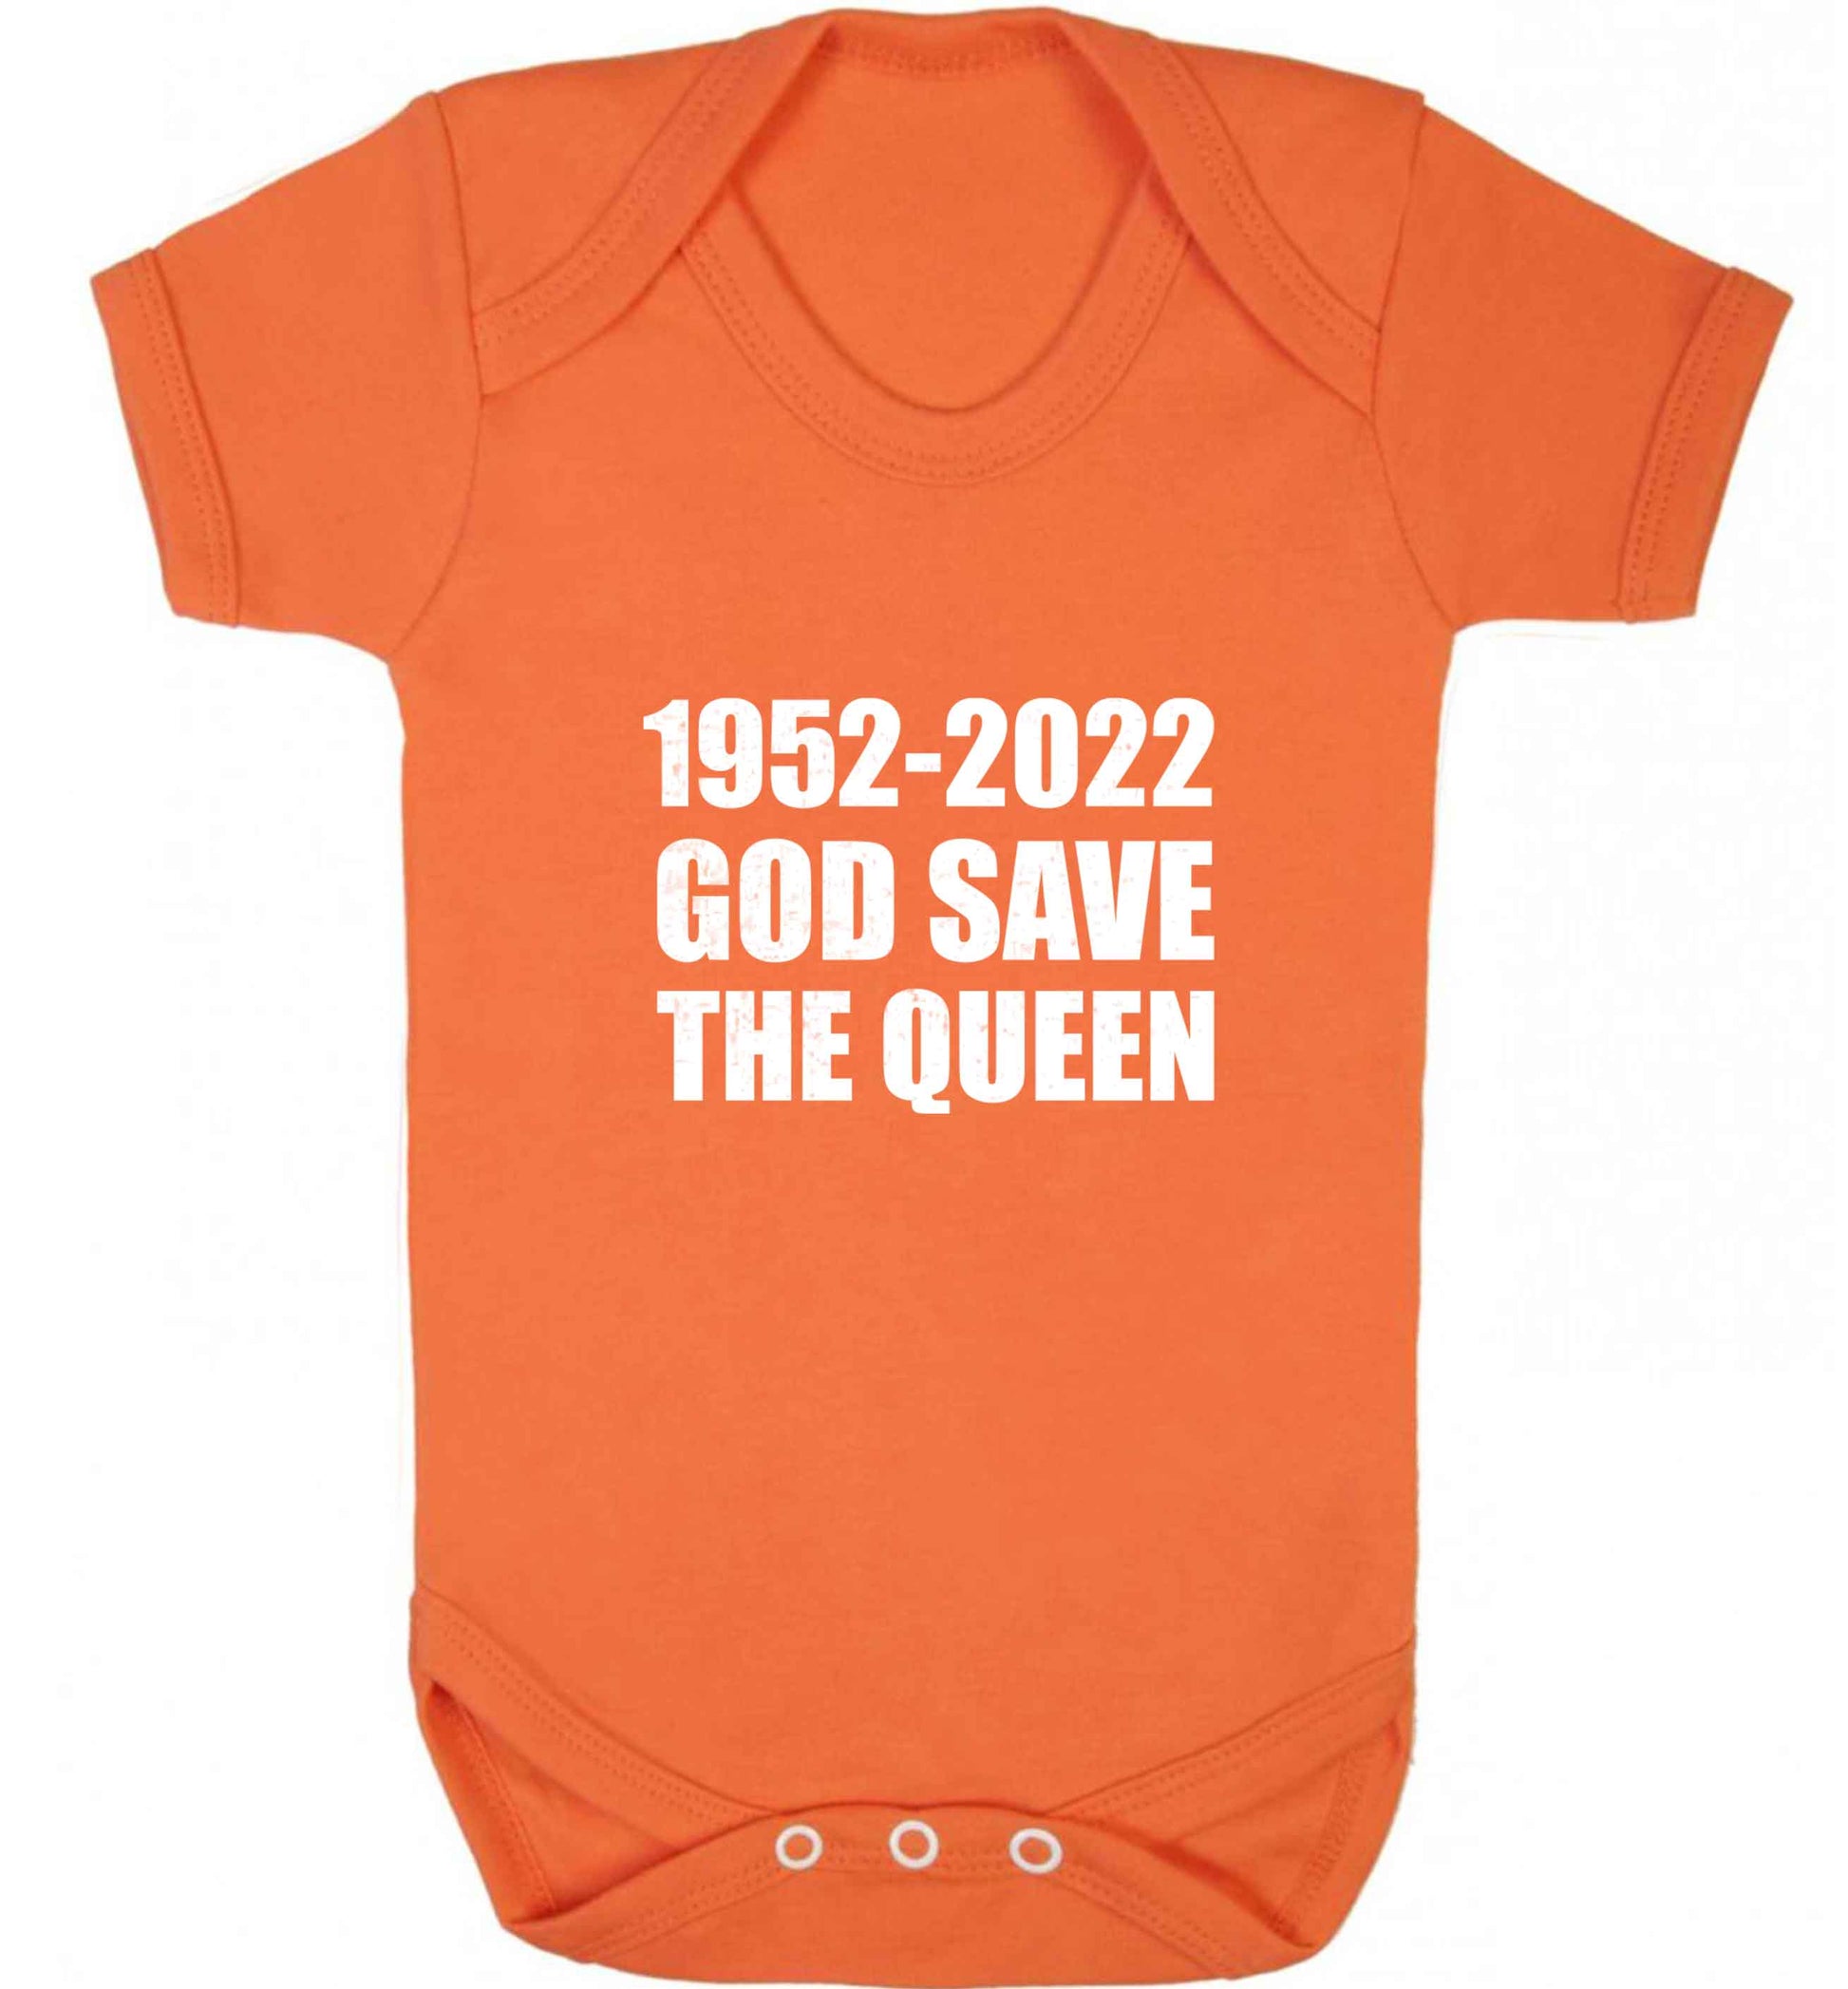 God save the queen baby vest orange 18-24 months